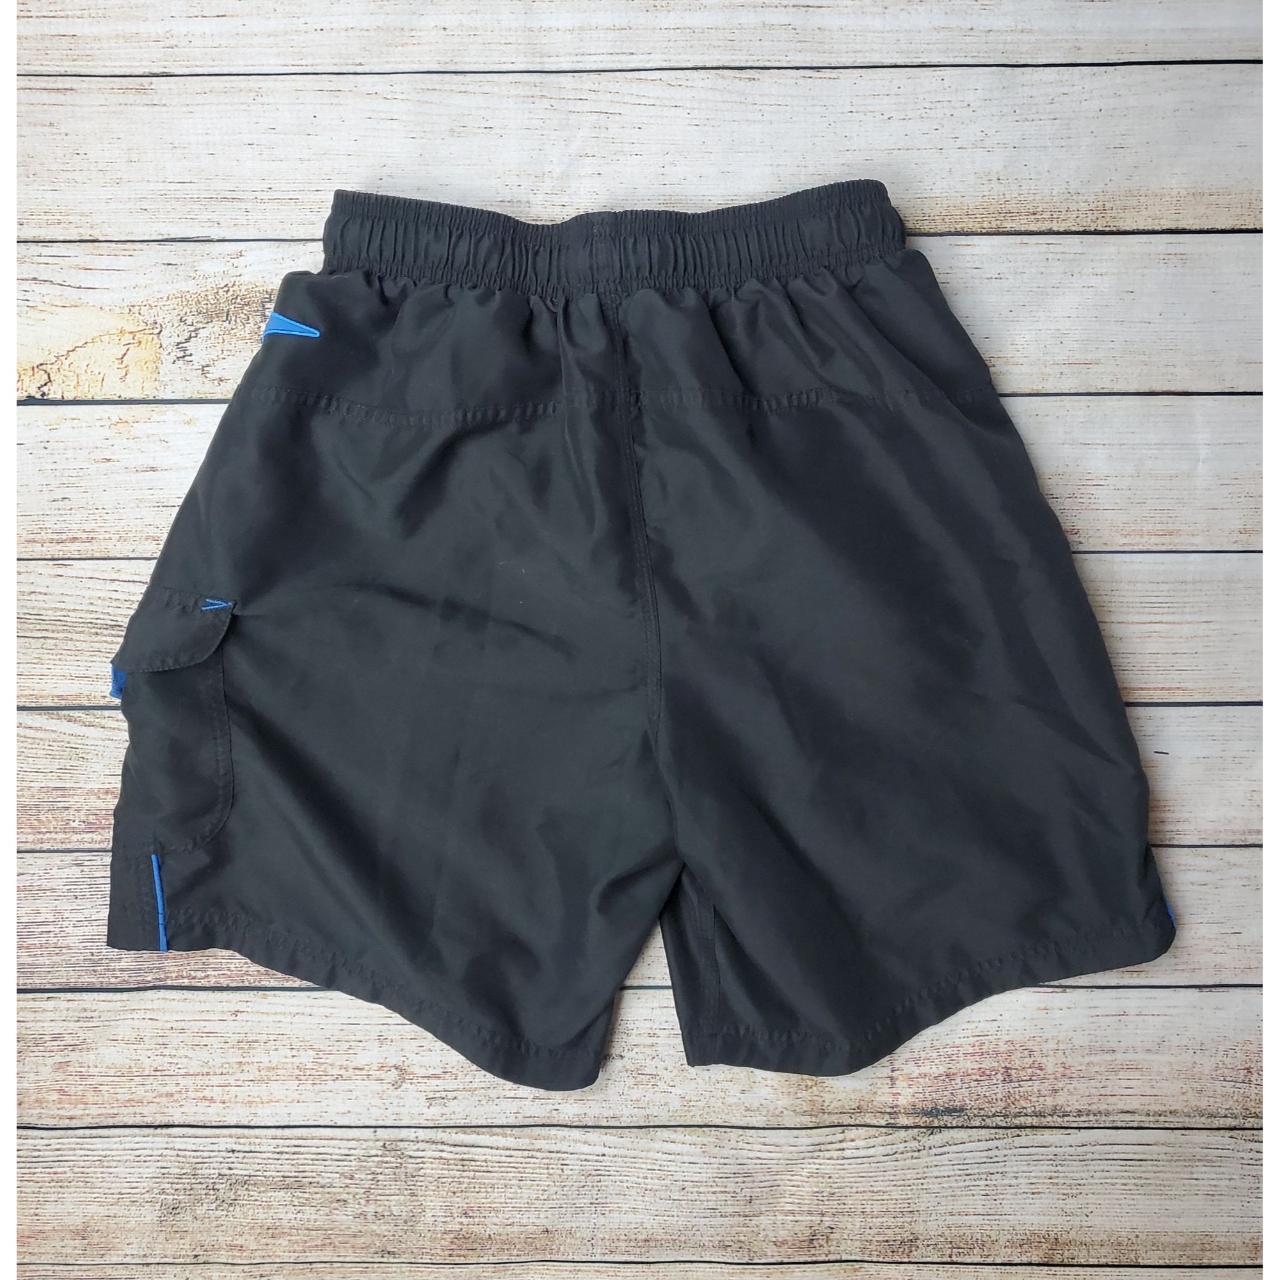 Product Image 2 - Med Speedo Board/Swim Shorts
Waist: 13
Length: